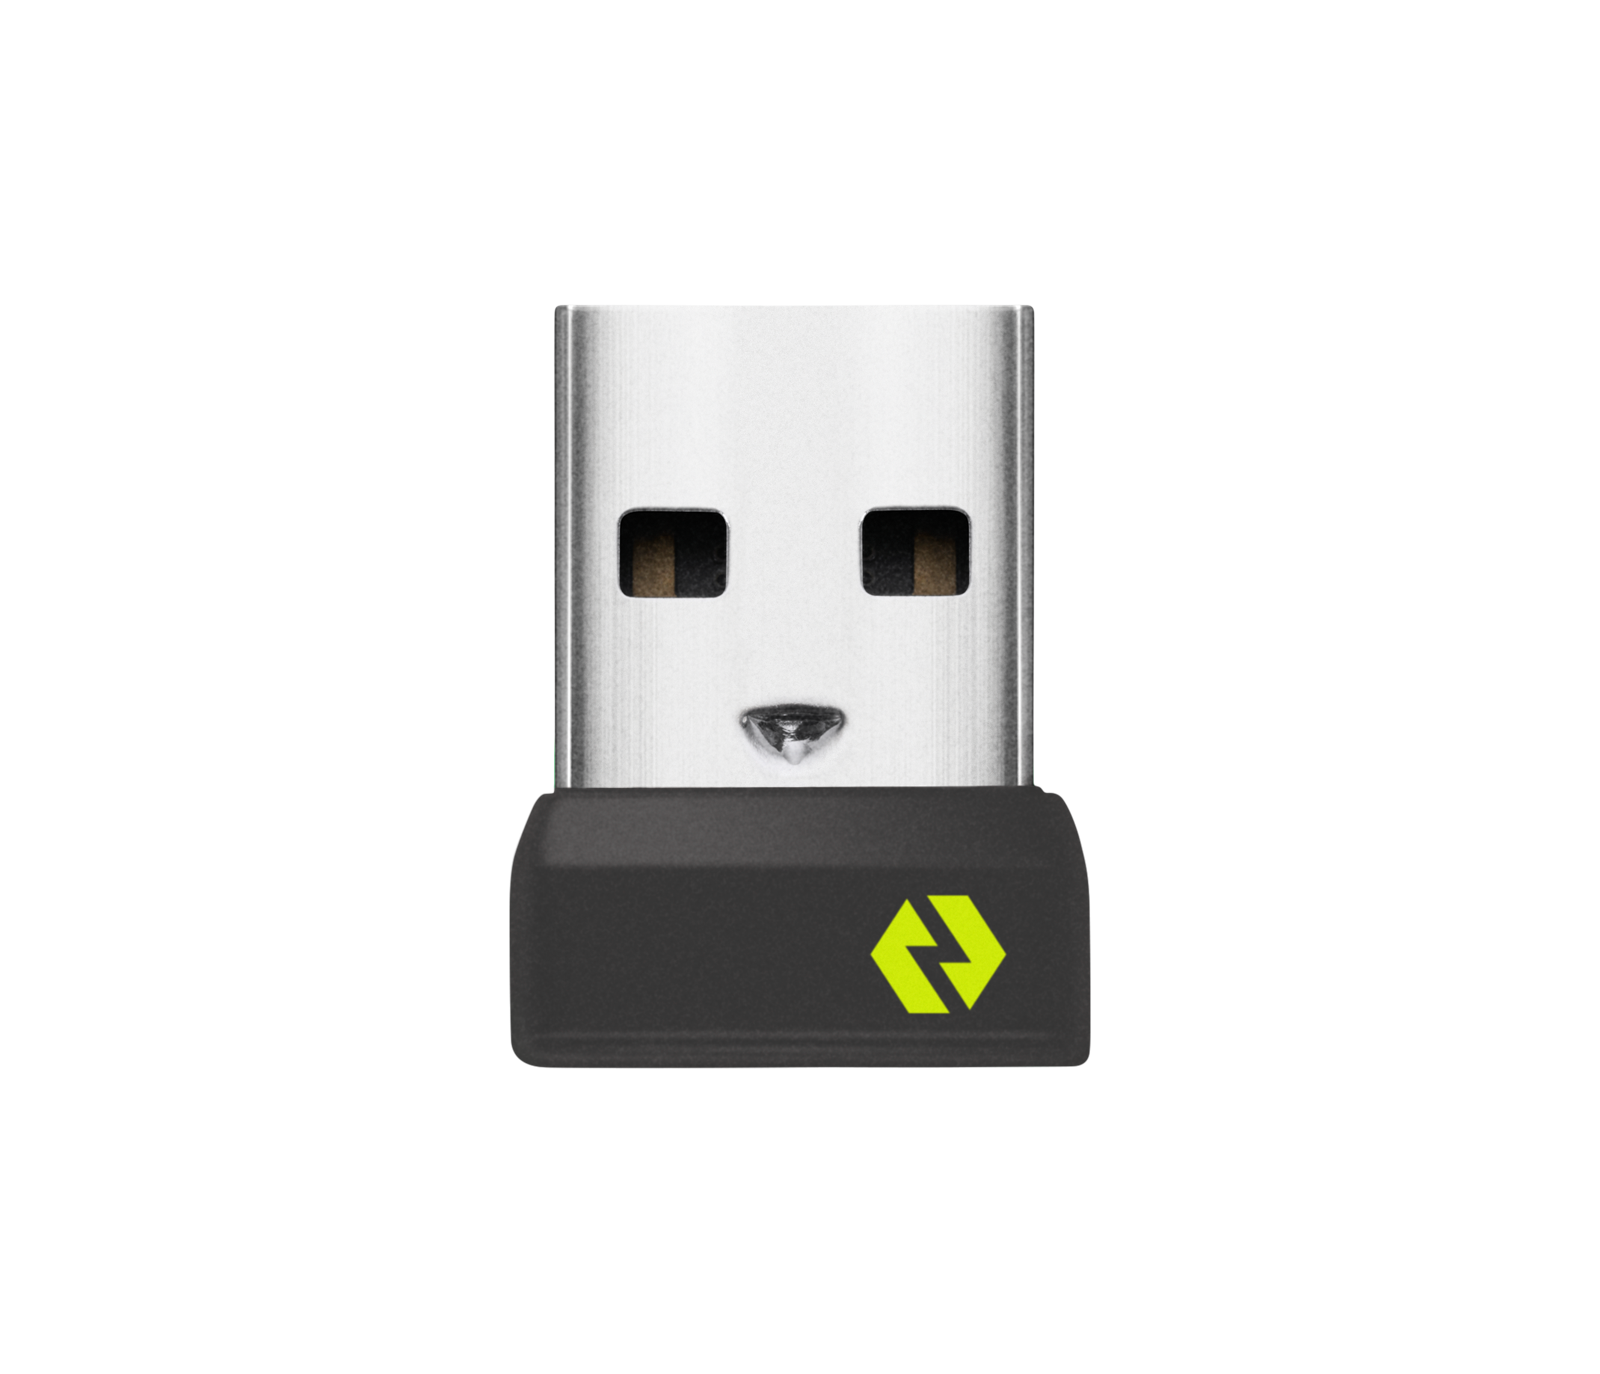 Kangoeroe struik gesloten Logi Bolt USB Receiver for Multi-Computer / Device Use